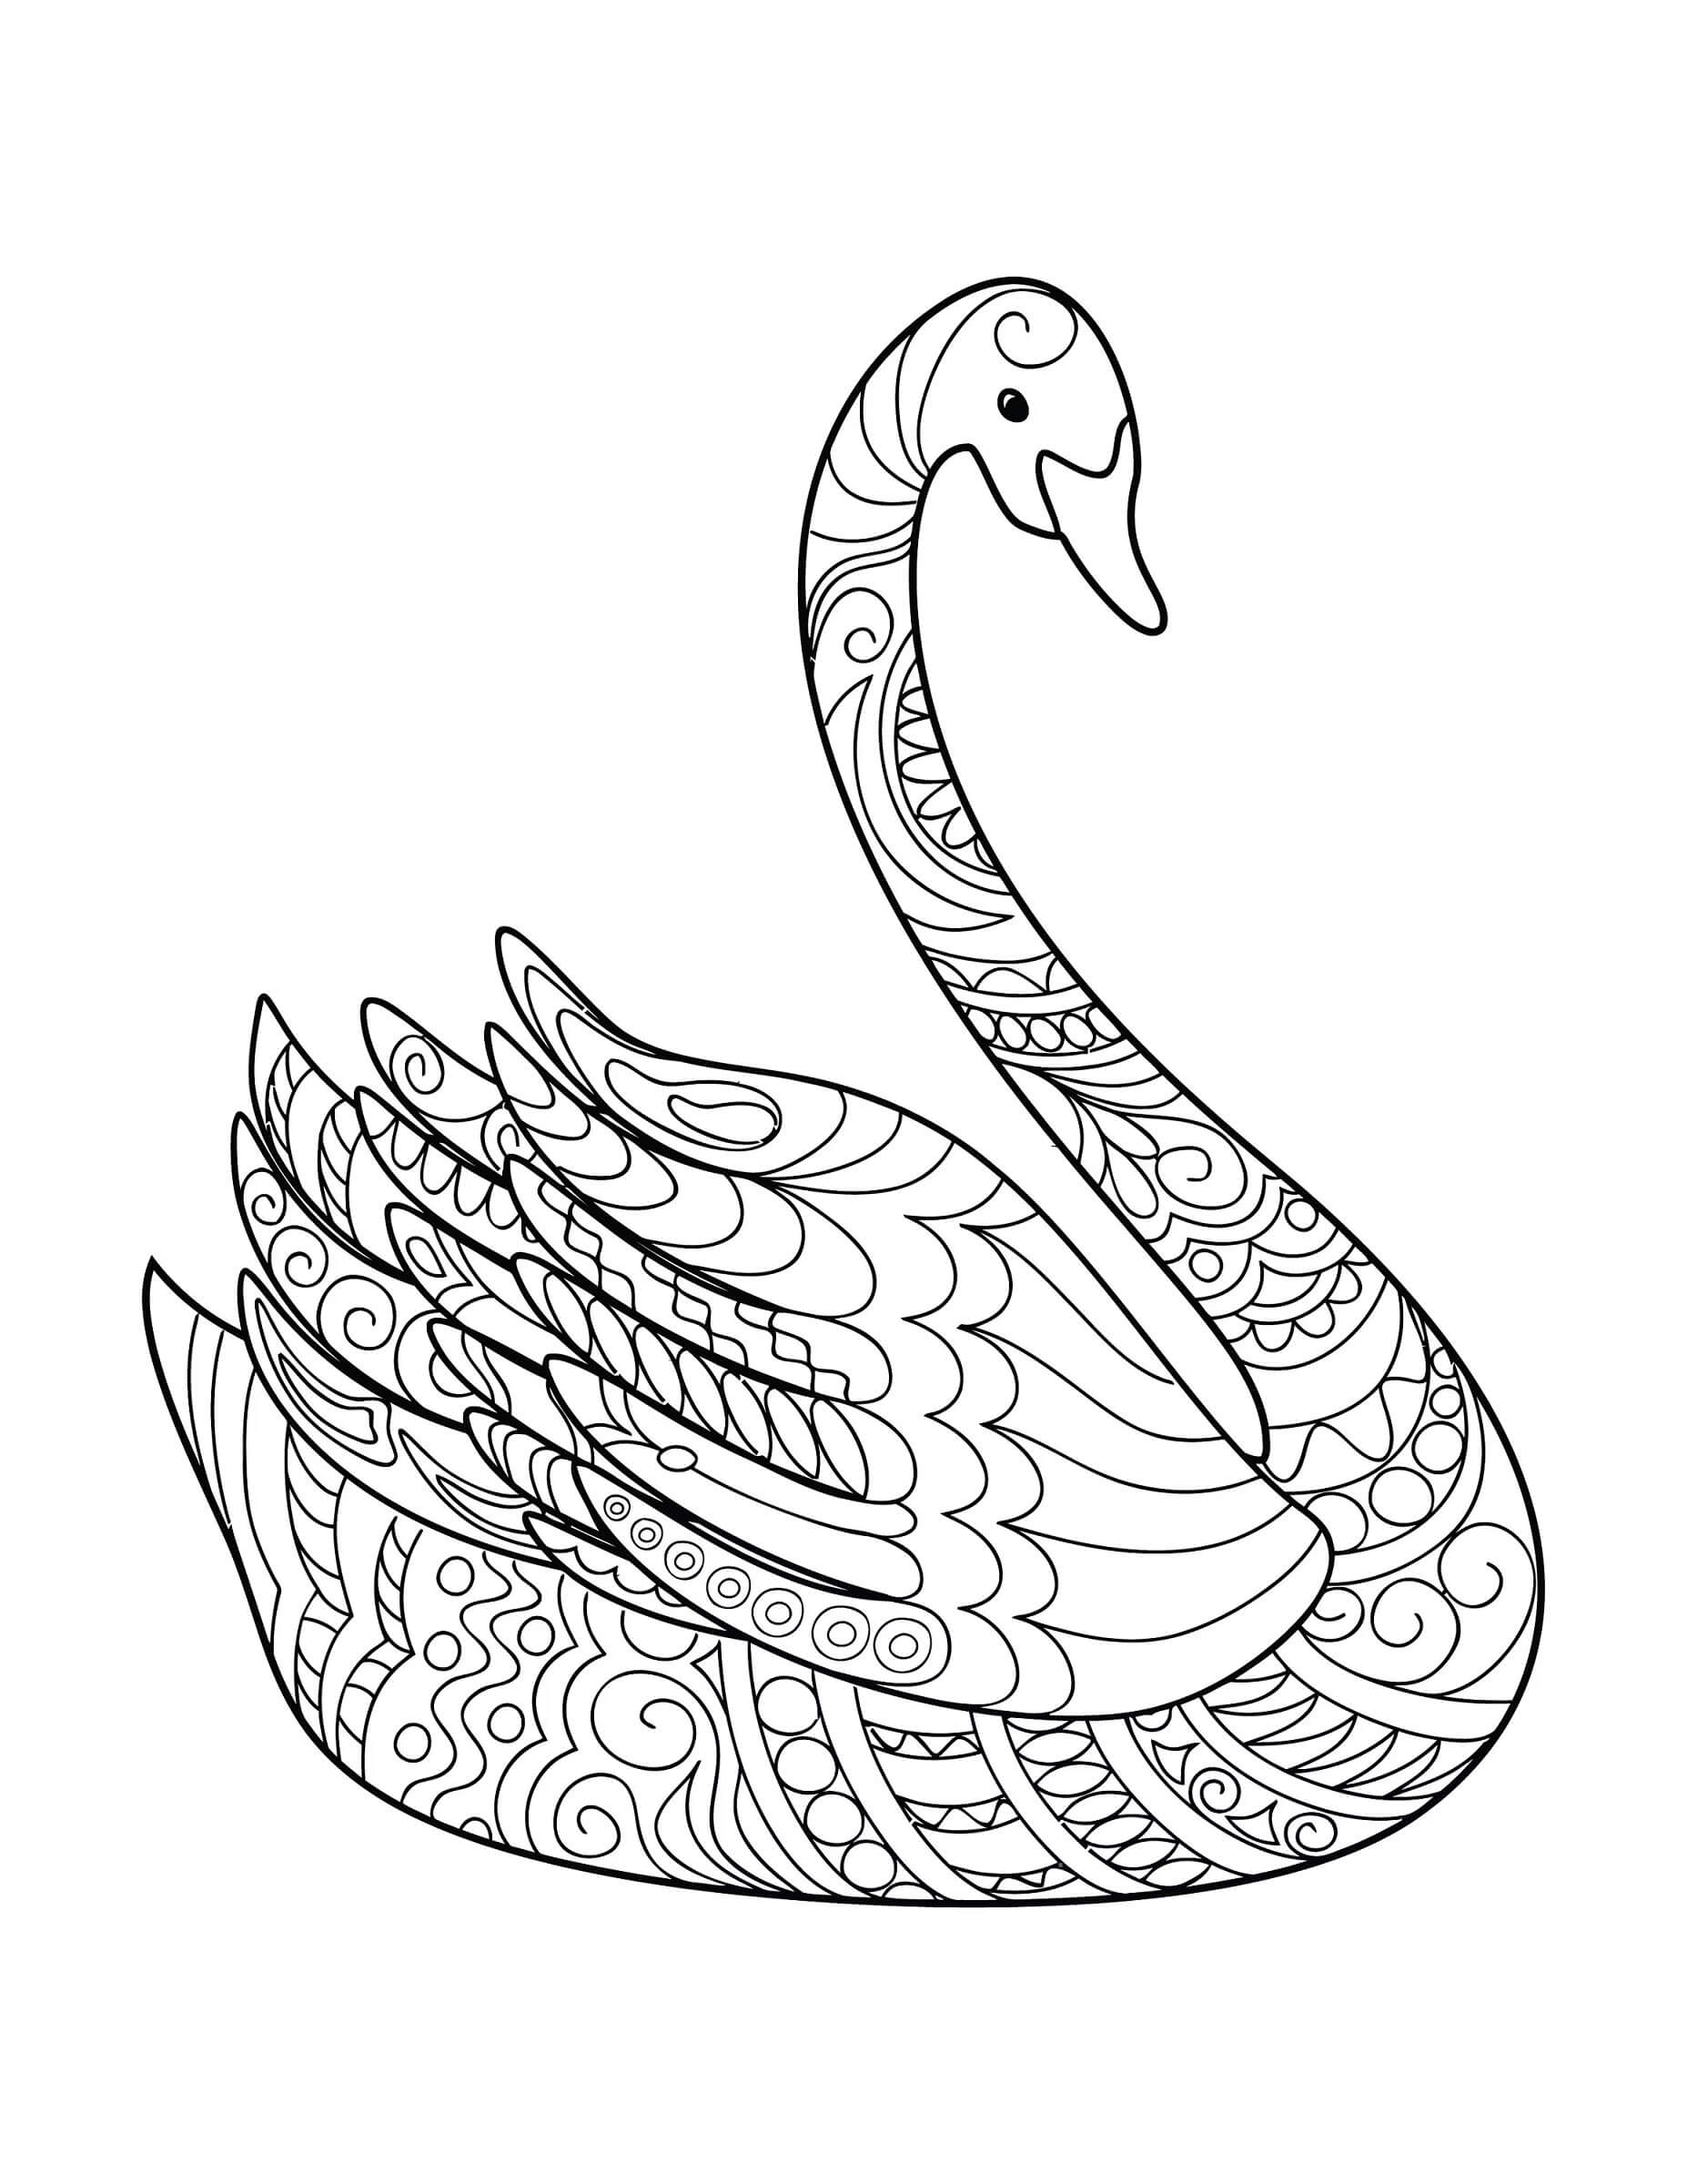 Mandala Swan Coloring Page - Sheet 1 Mandalas